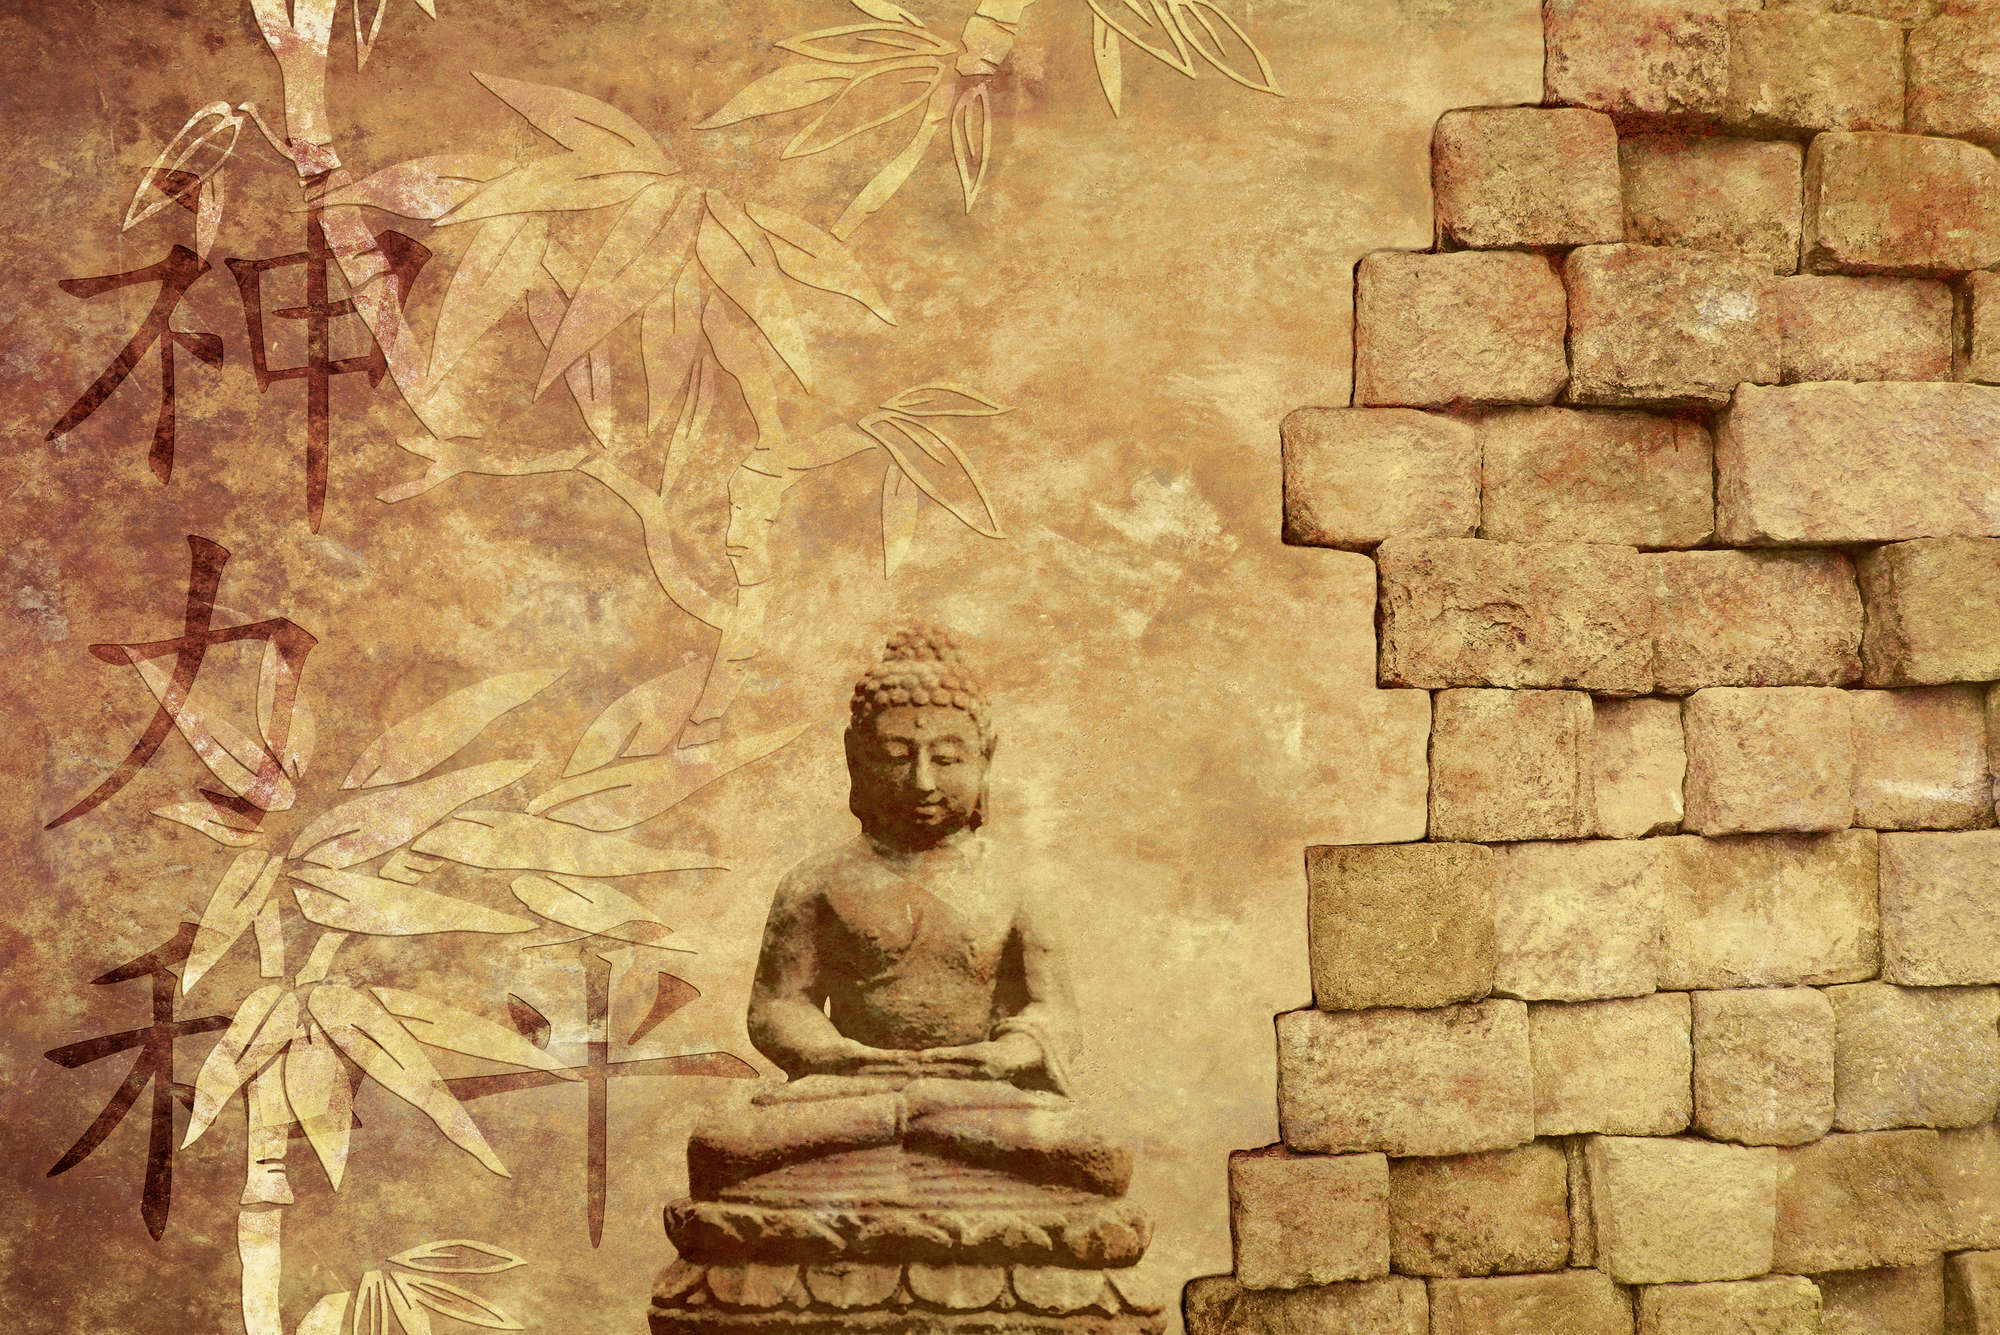             Fototapete Mauer mit Buddha-Figur – Premium Glattvlies
        